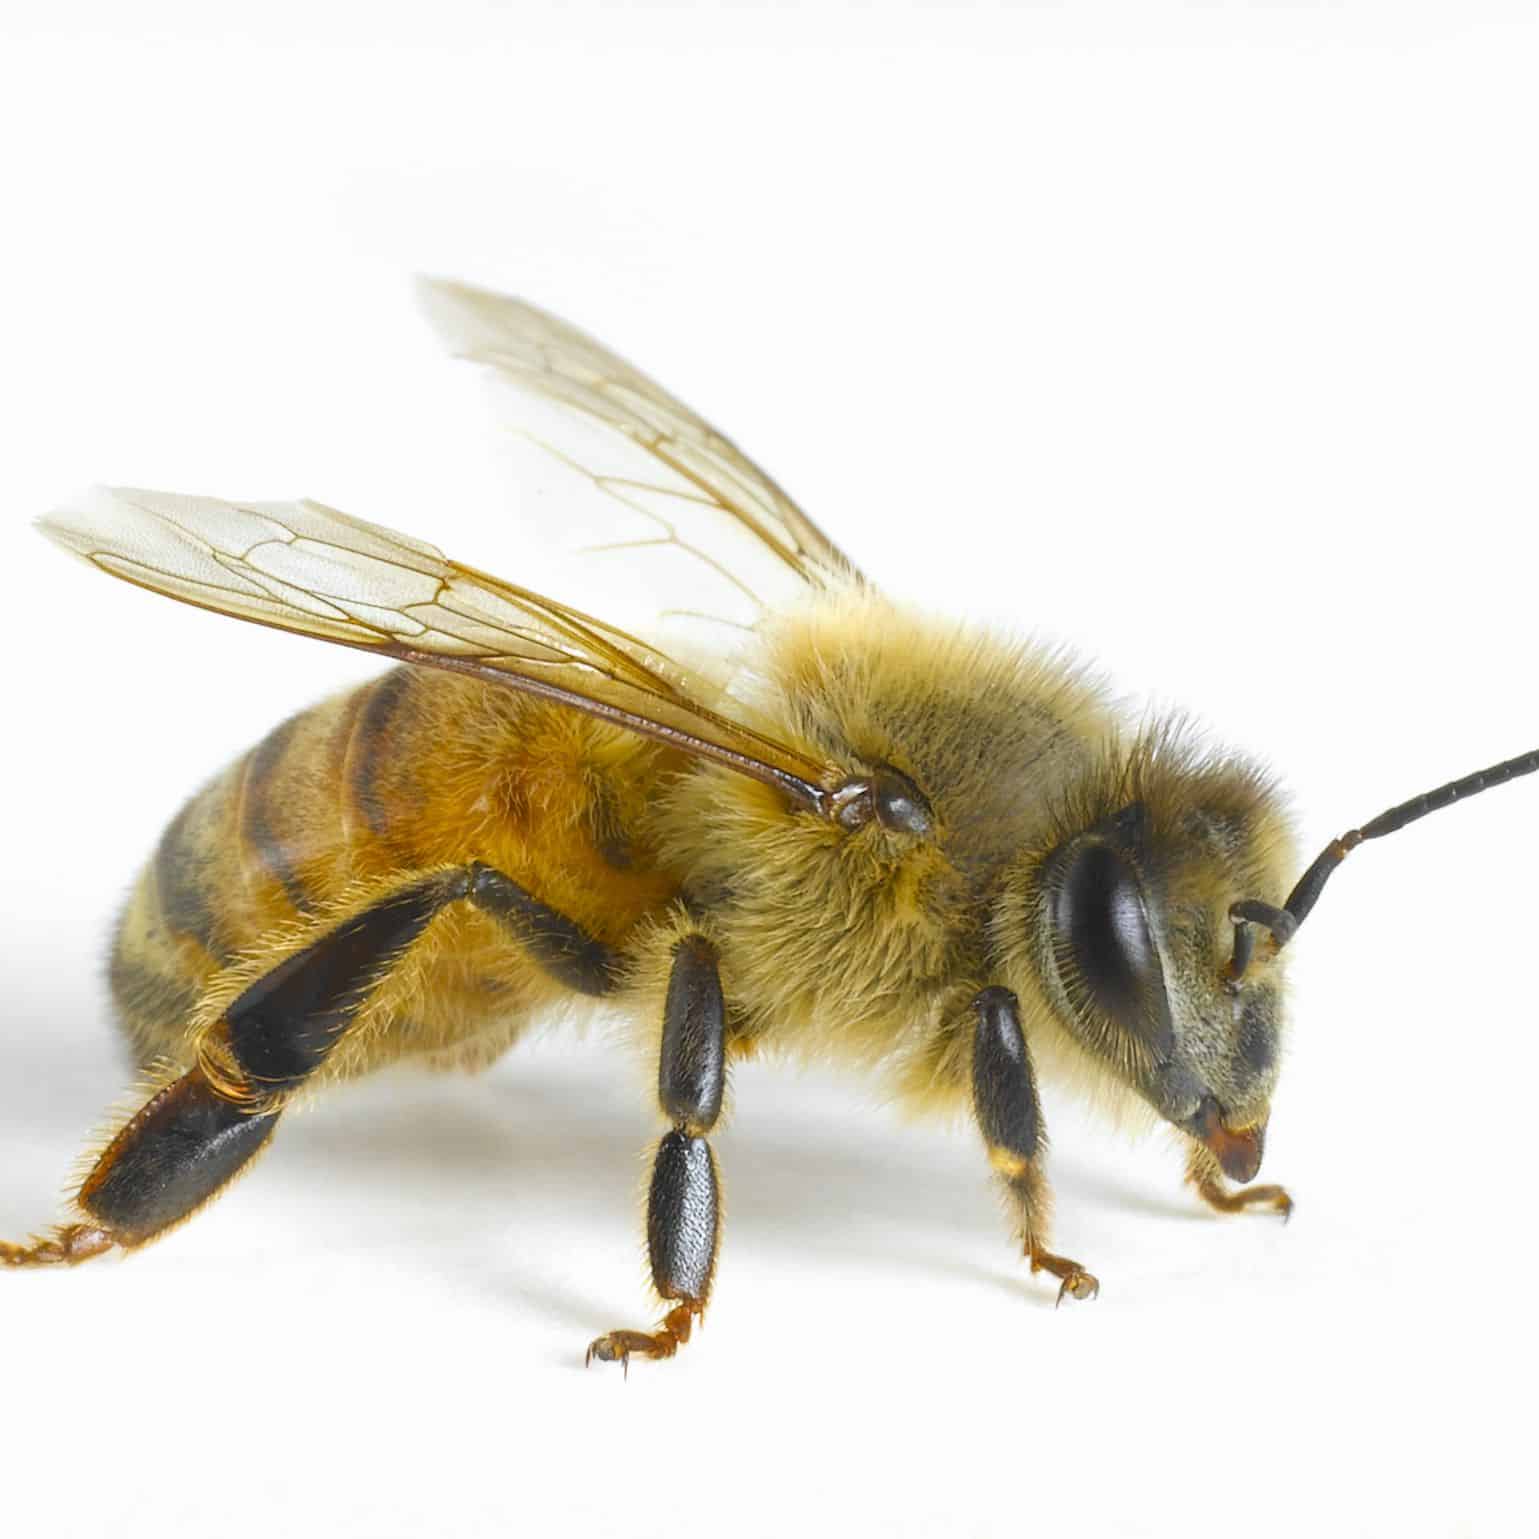 मधुमक्खी (Honey bee)